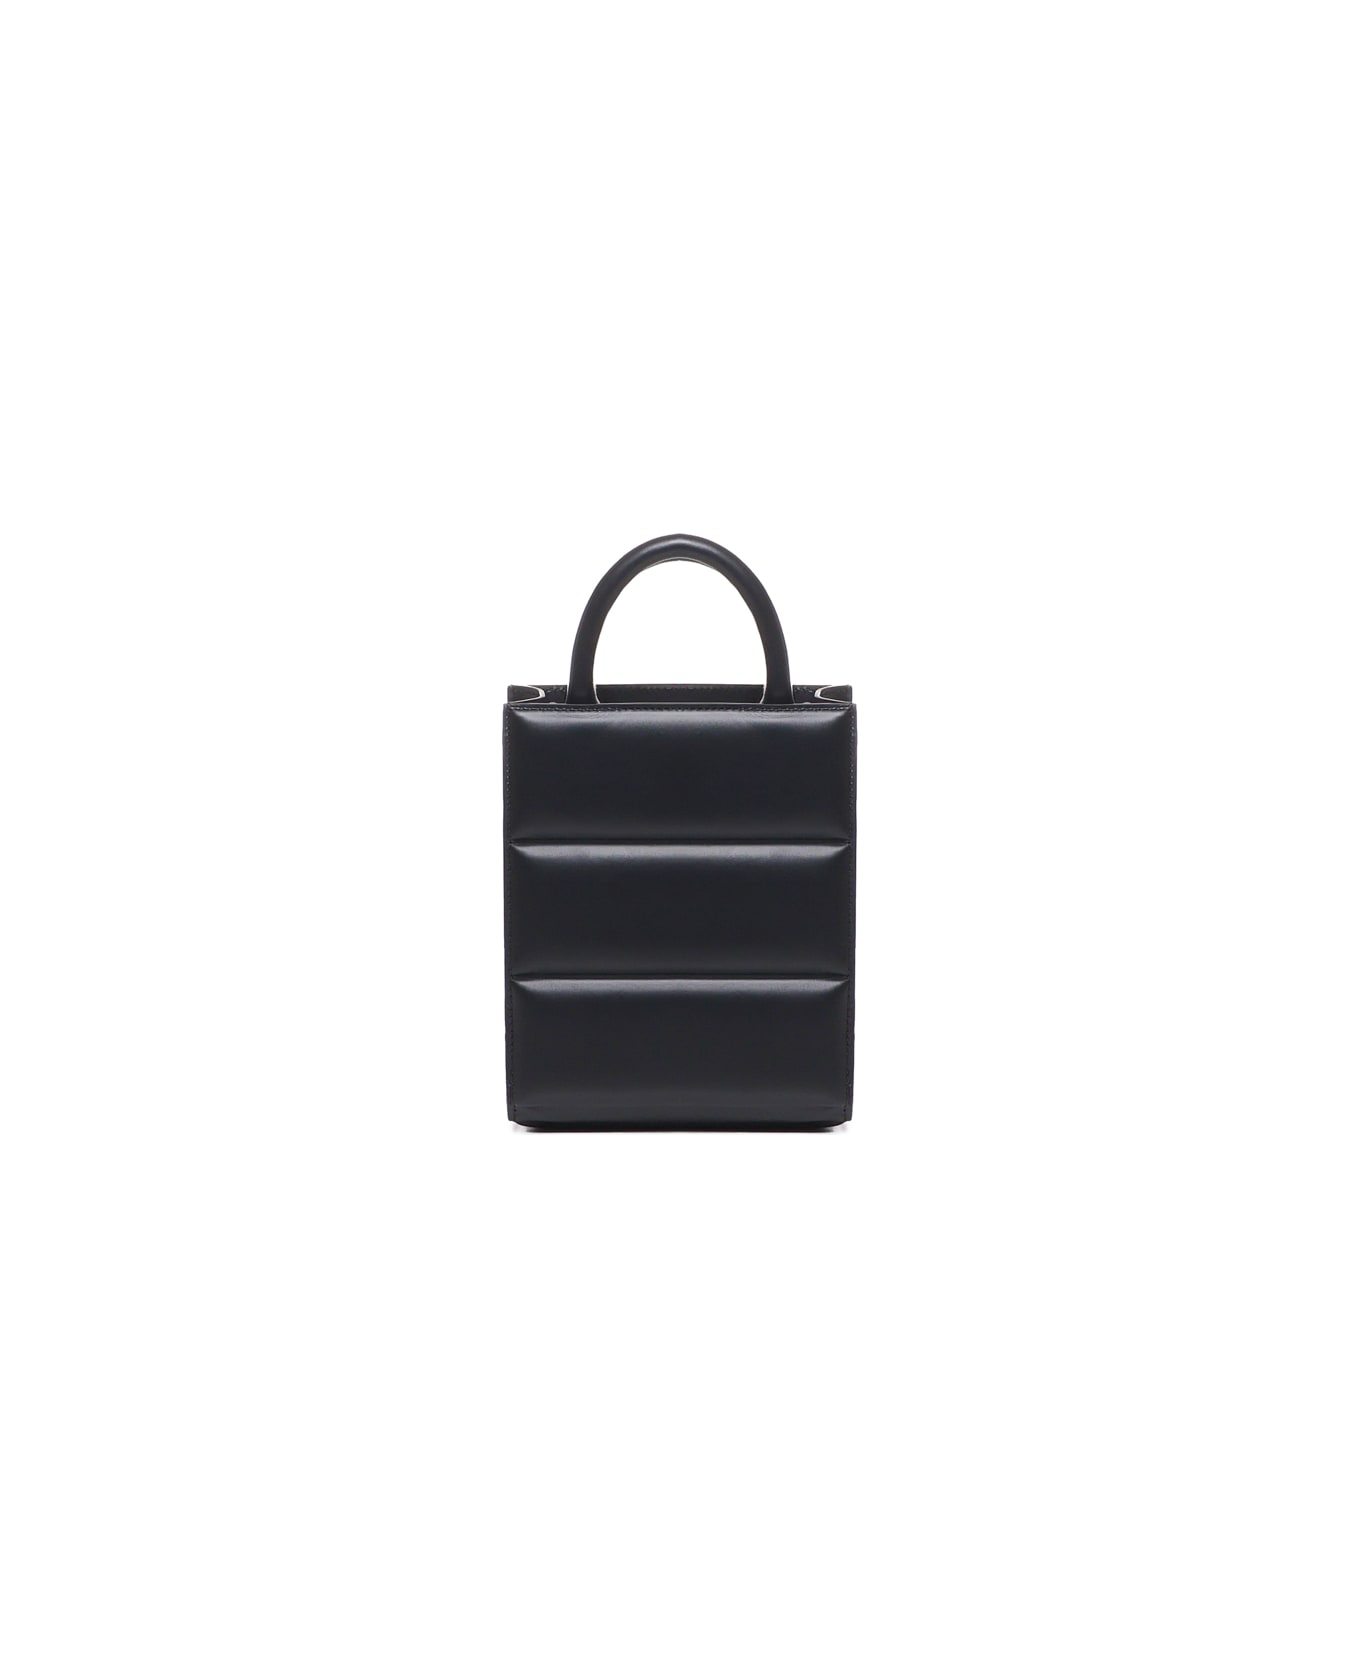 Moncler Leather Doudoune Mini Tote Bag - Black